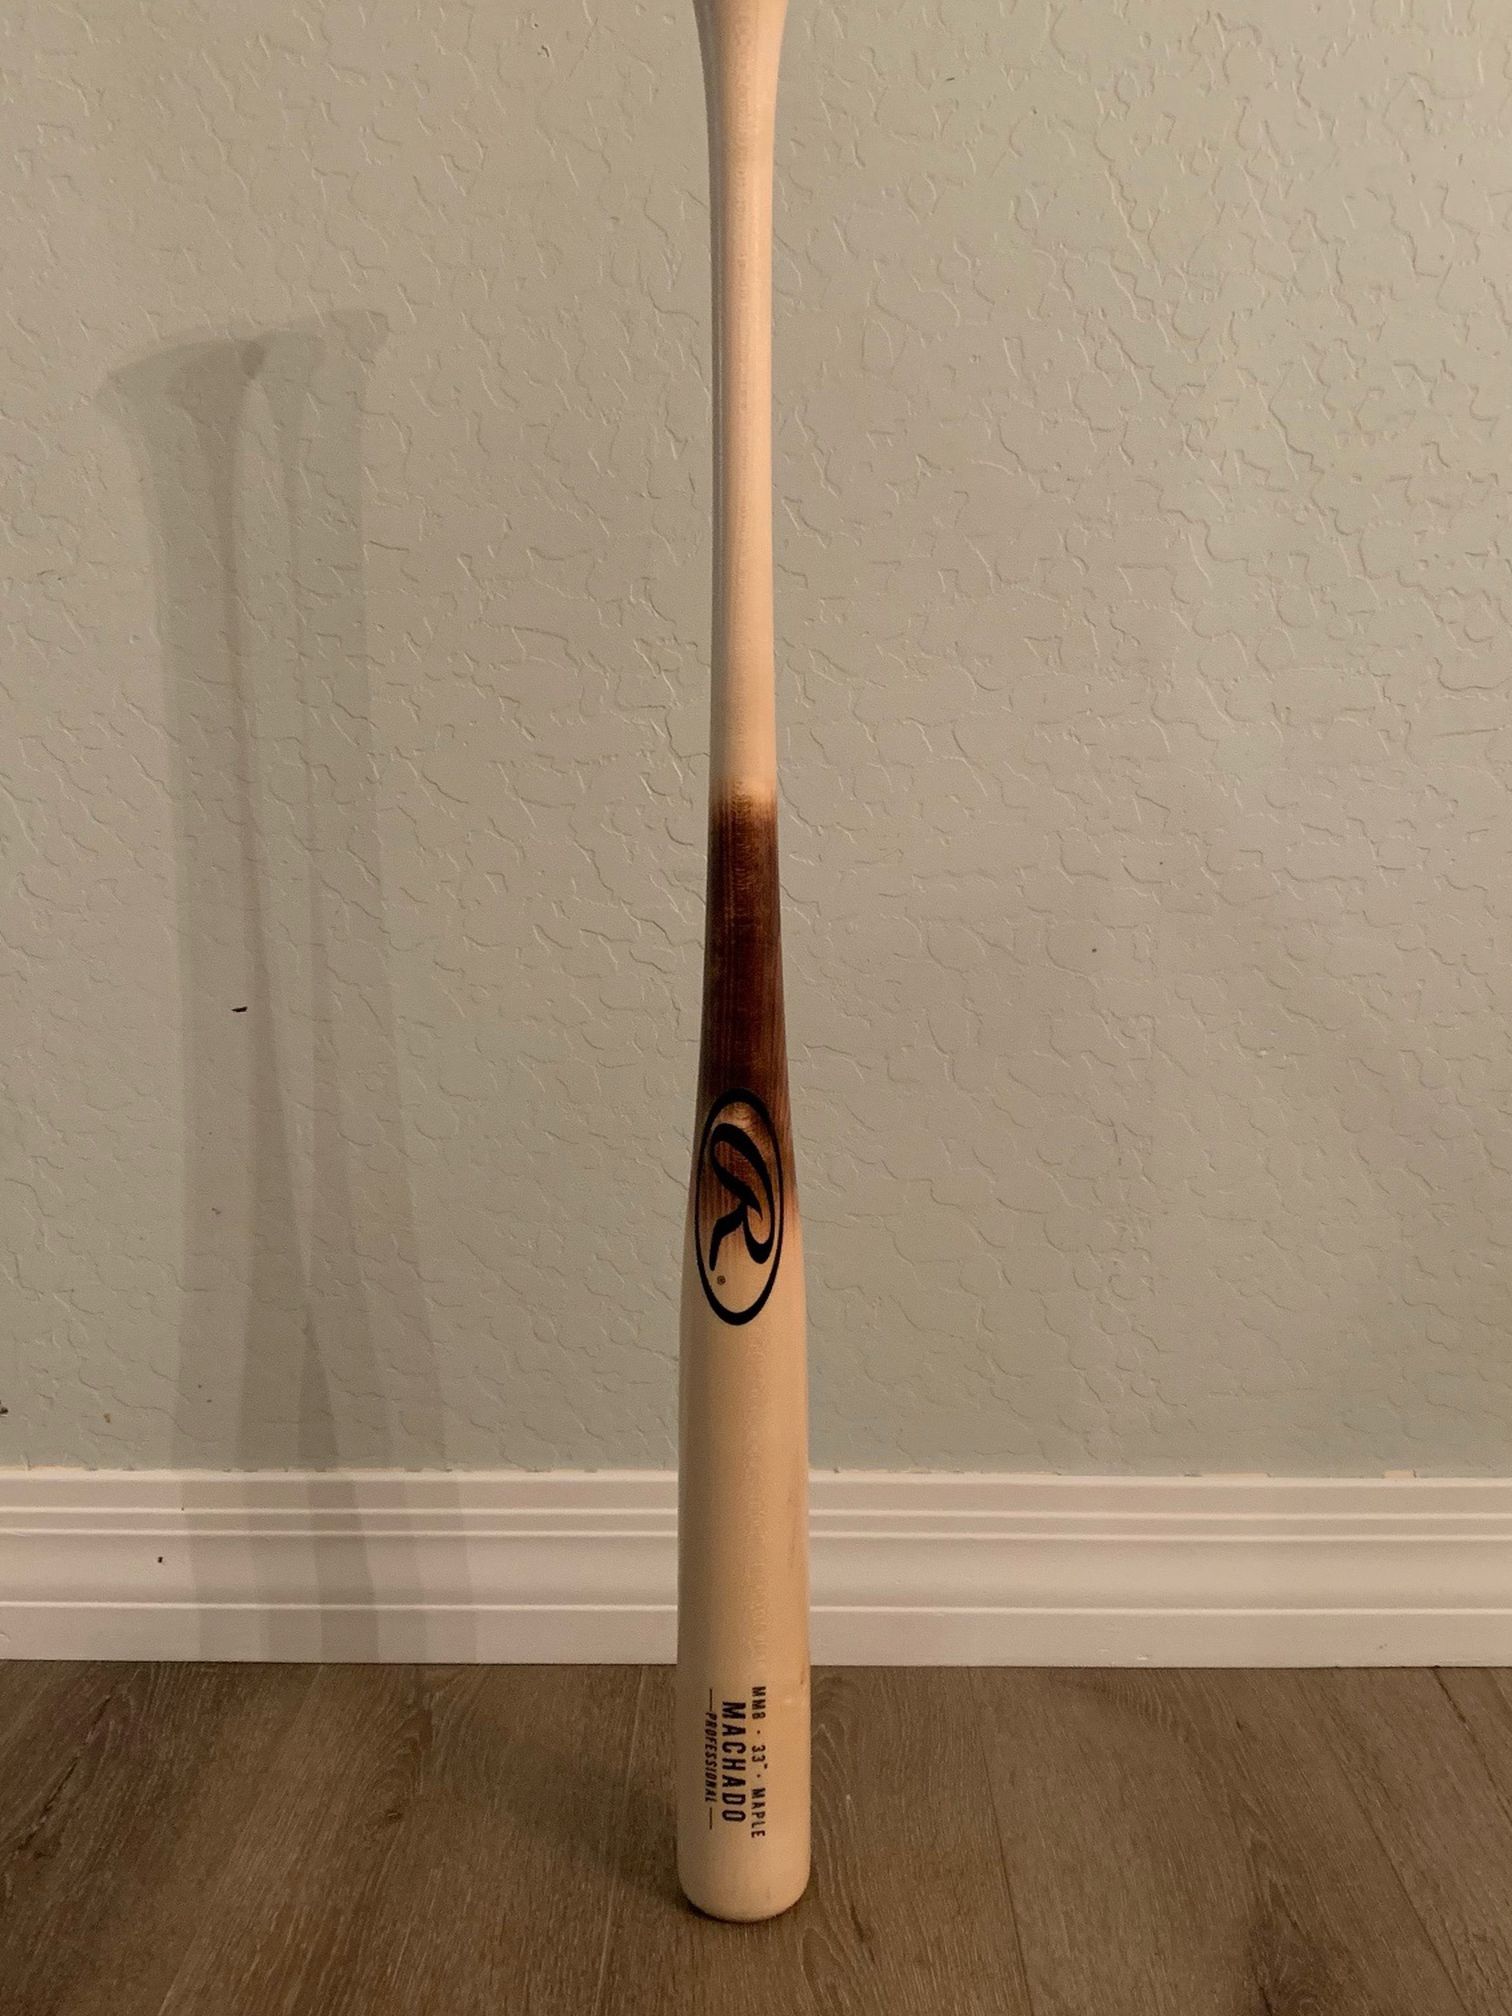 Rawlings MM8 33” Maple Wood Bat - BRAND NEW